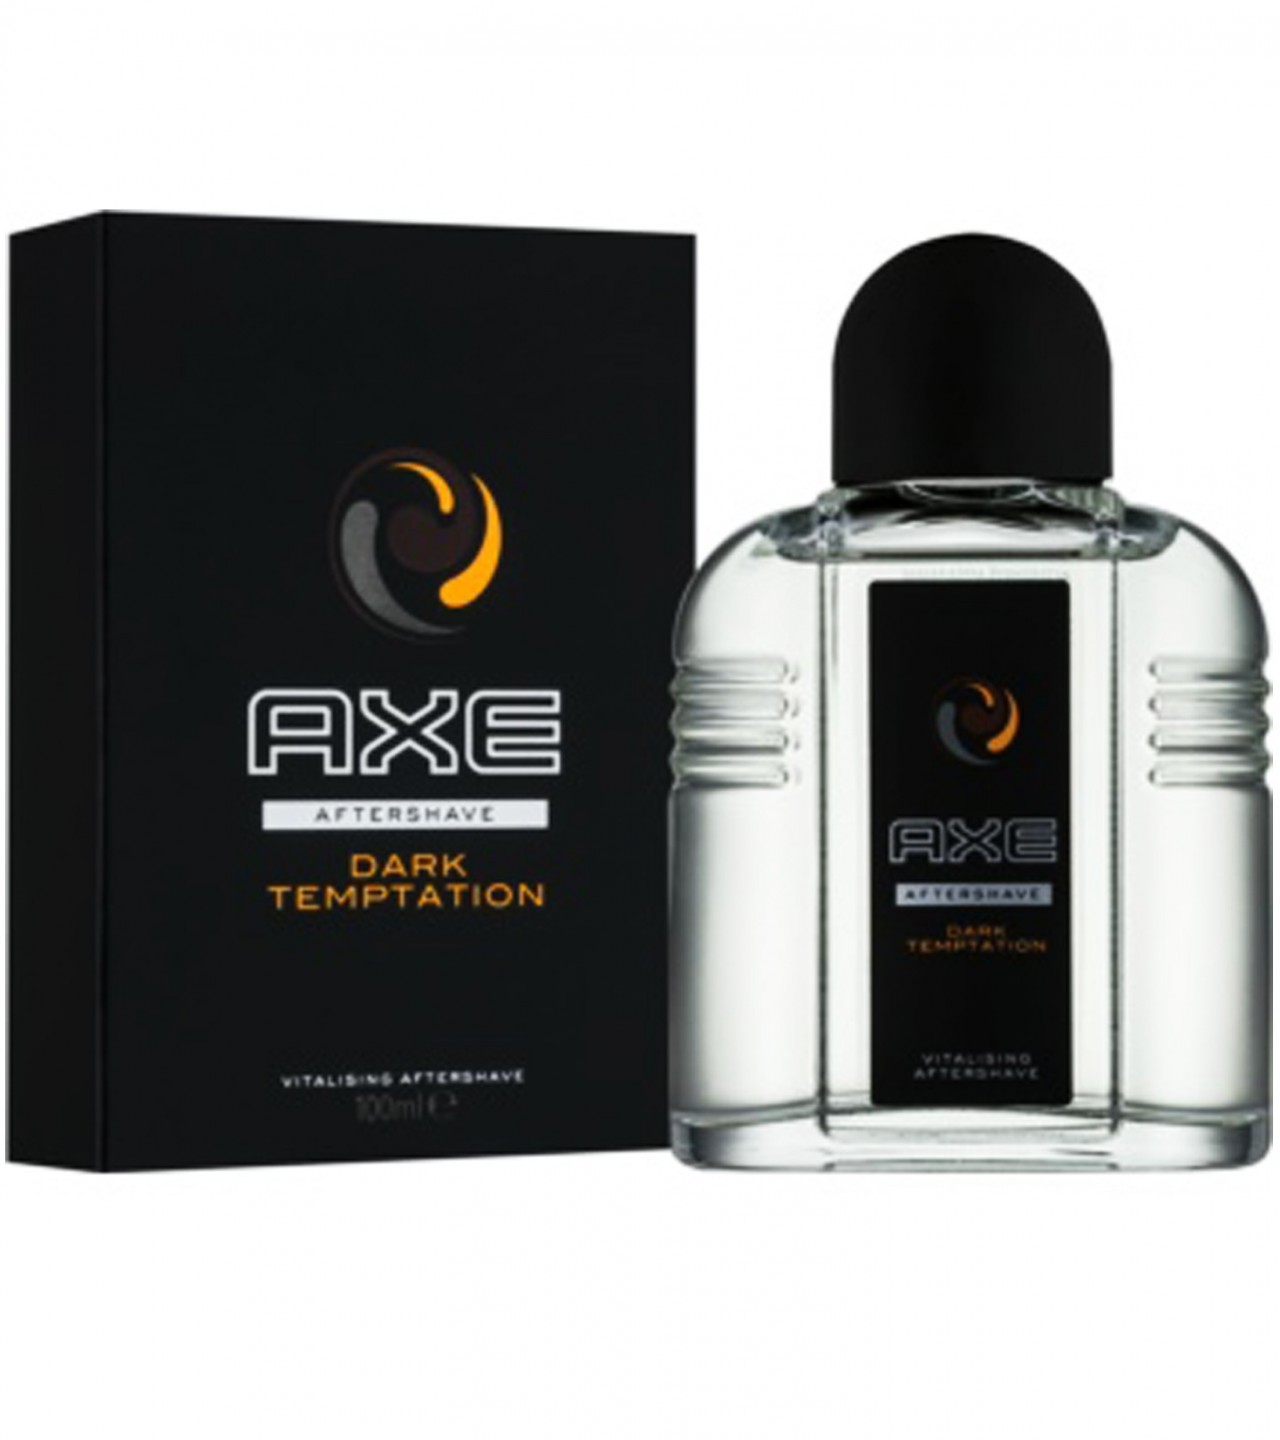 Axe Dark Temptation After Shave - 100 ml - Black